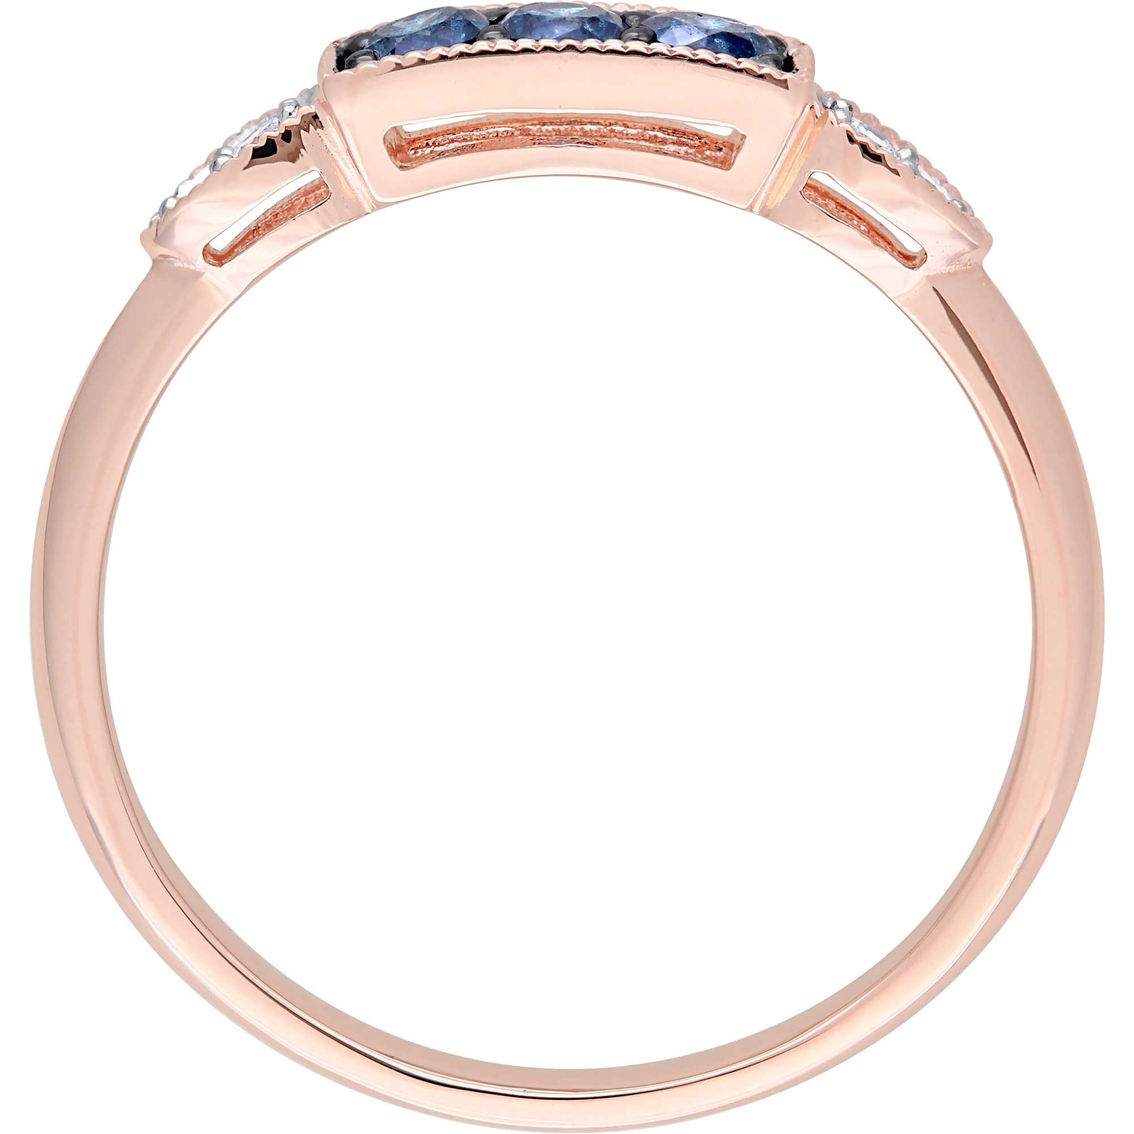 Sofia B. 10K Rose Gold 1/4 CT TW Blue and White Diamond 3 Stone Ring - Image 3 of 4